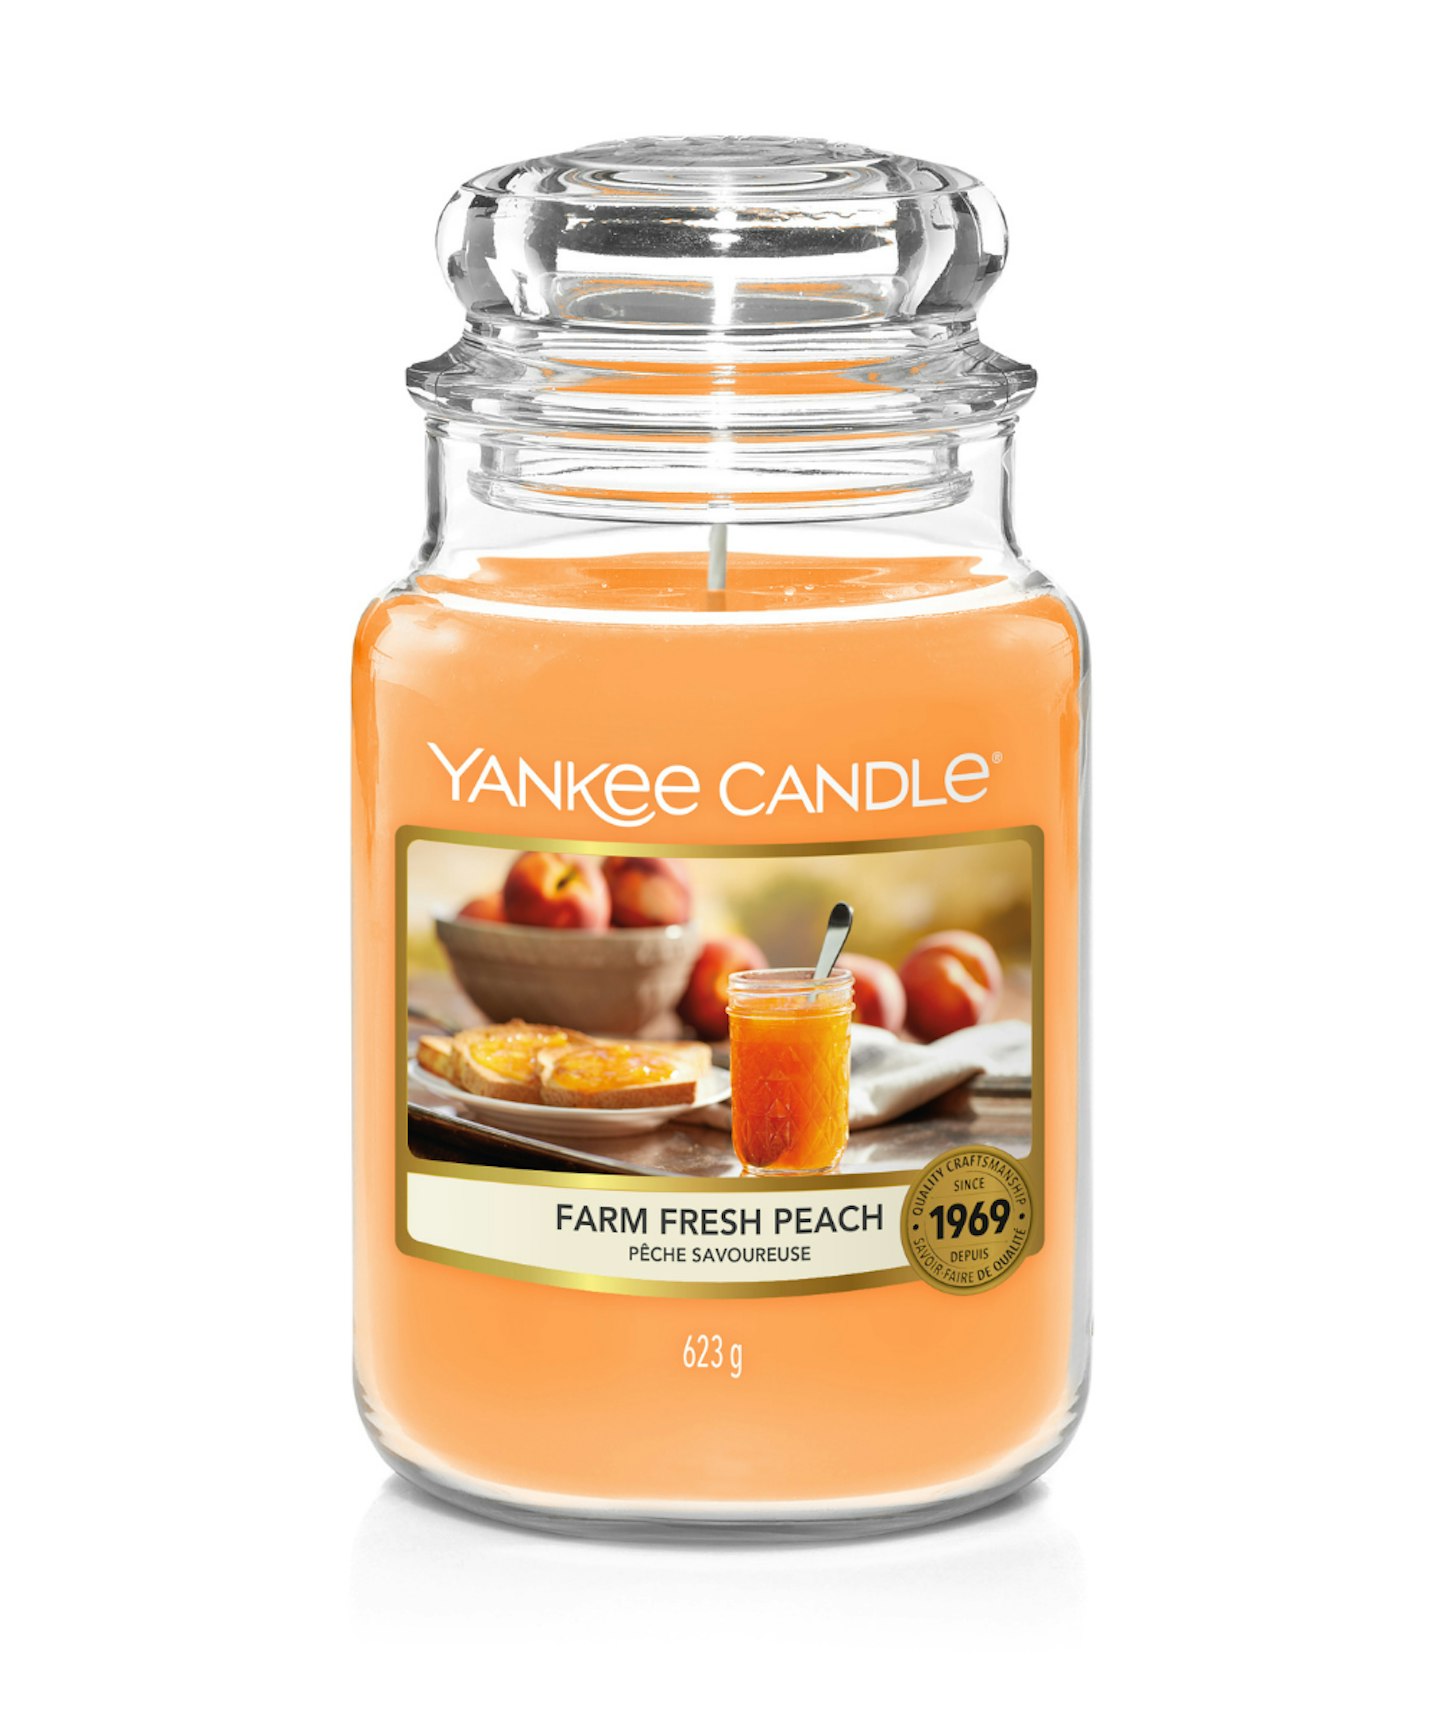 Yankee Candle Candle, Farm Fresh Peach (Large)